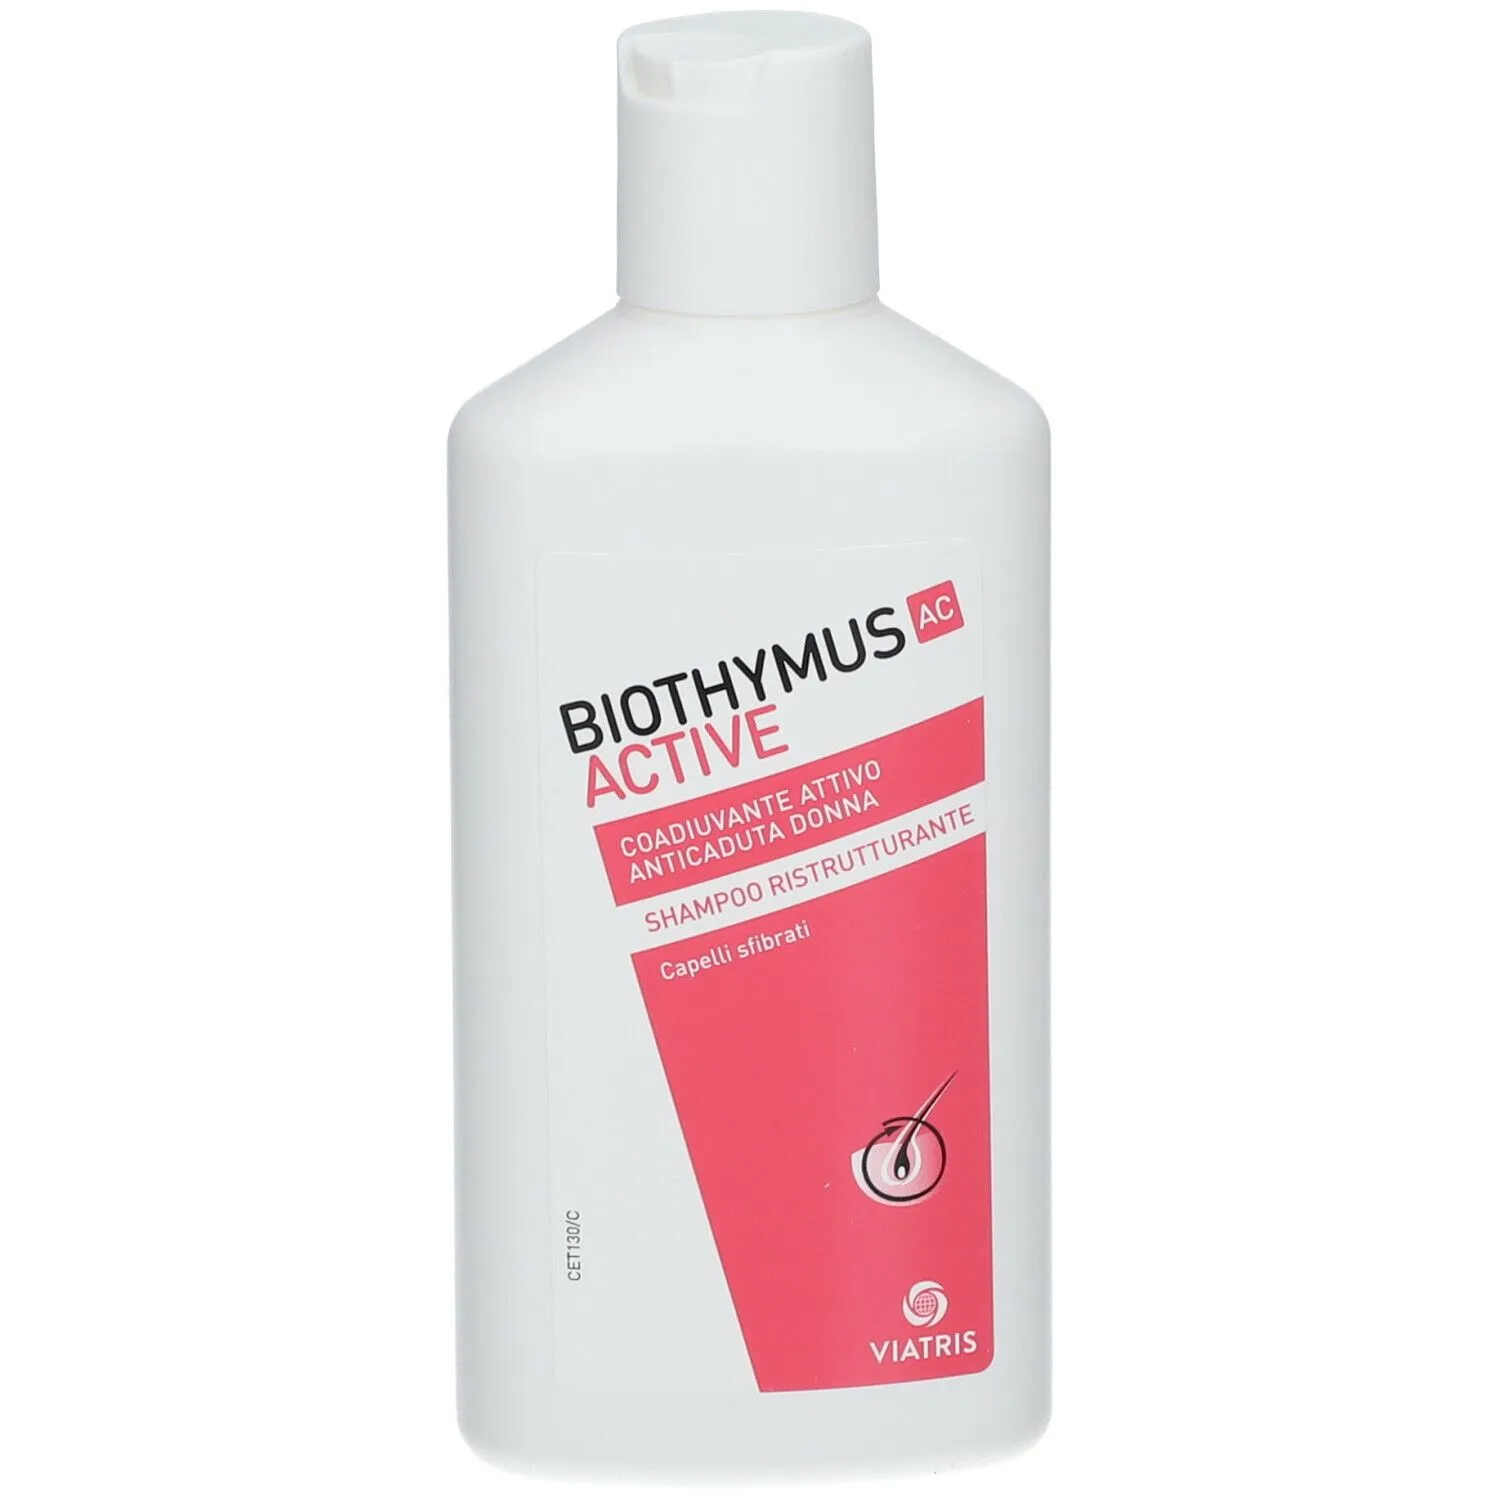 Biothymus AC Active Shampoo Ristrutturante